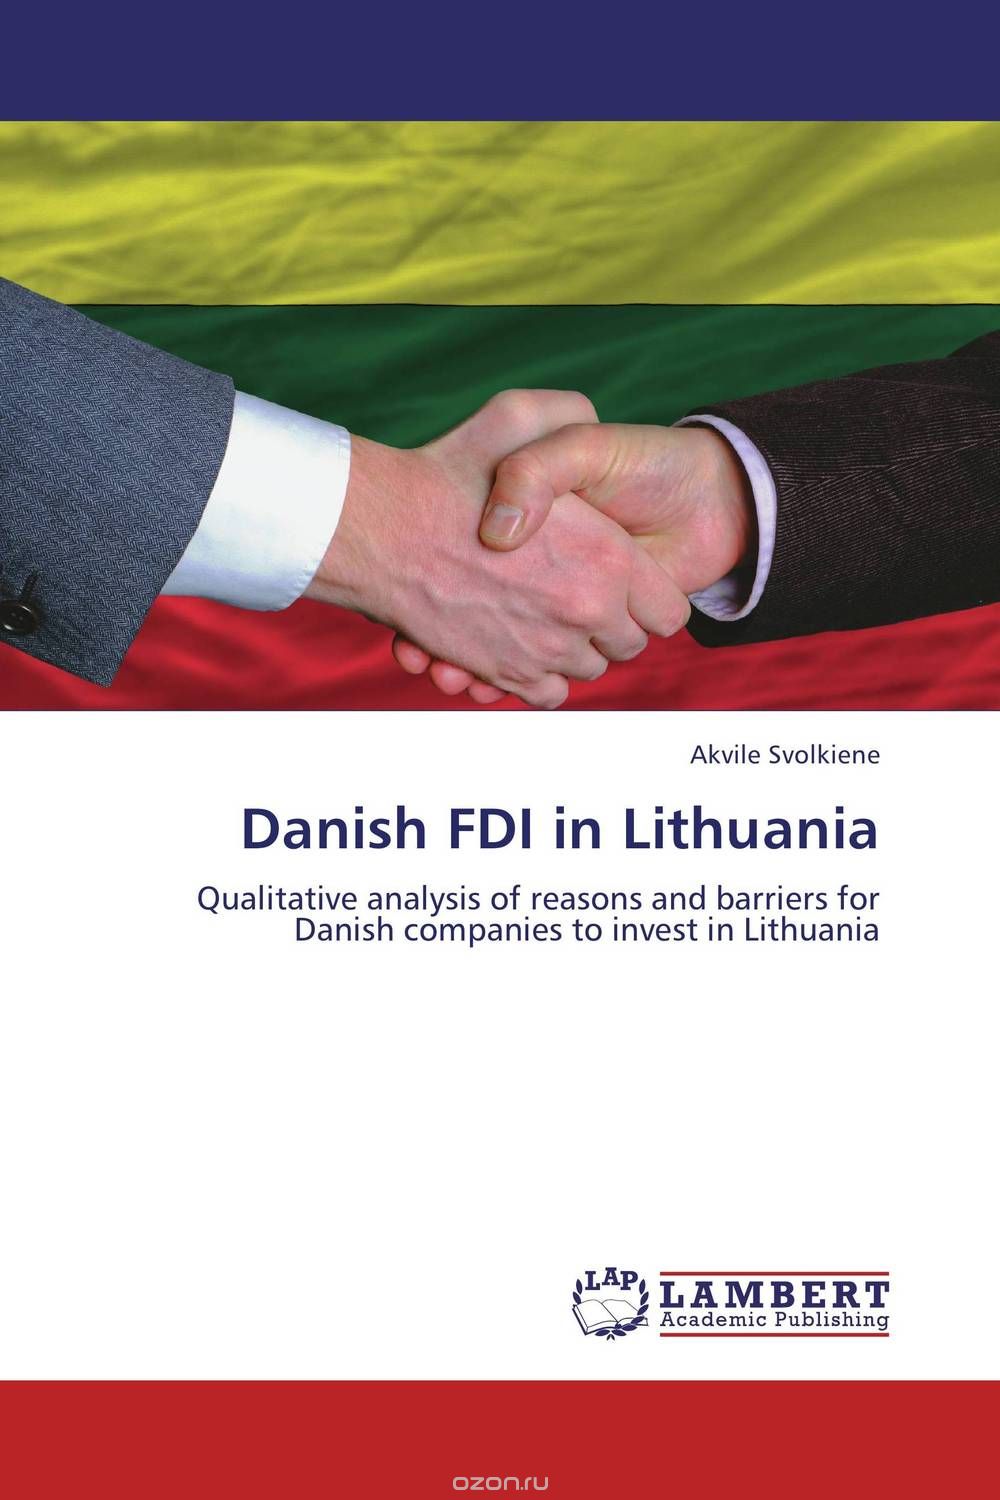 Скачать книгу "Danish FDI in Lithuania"